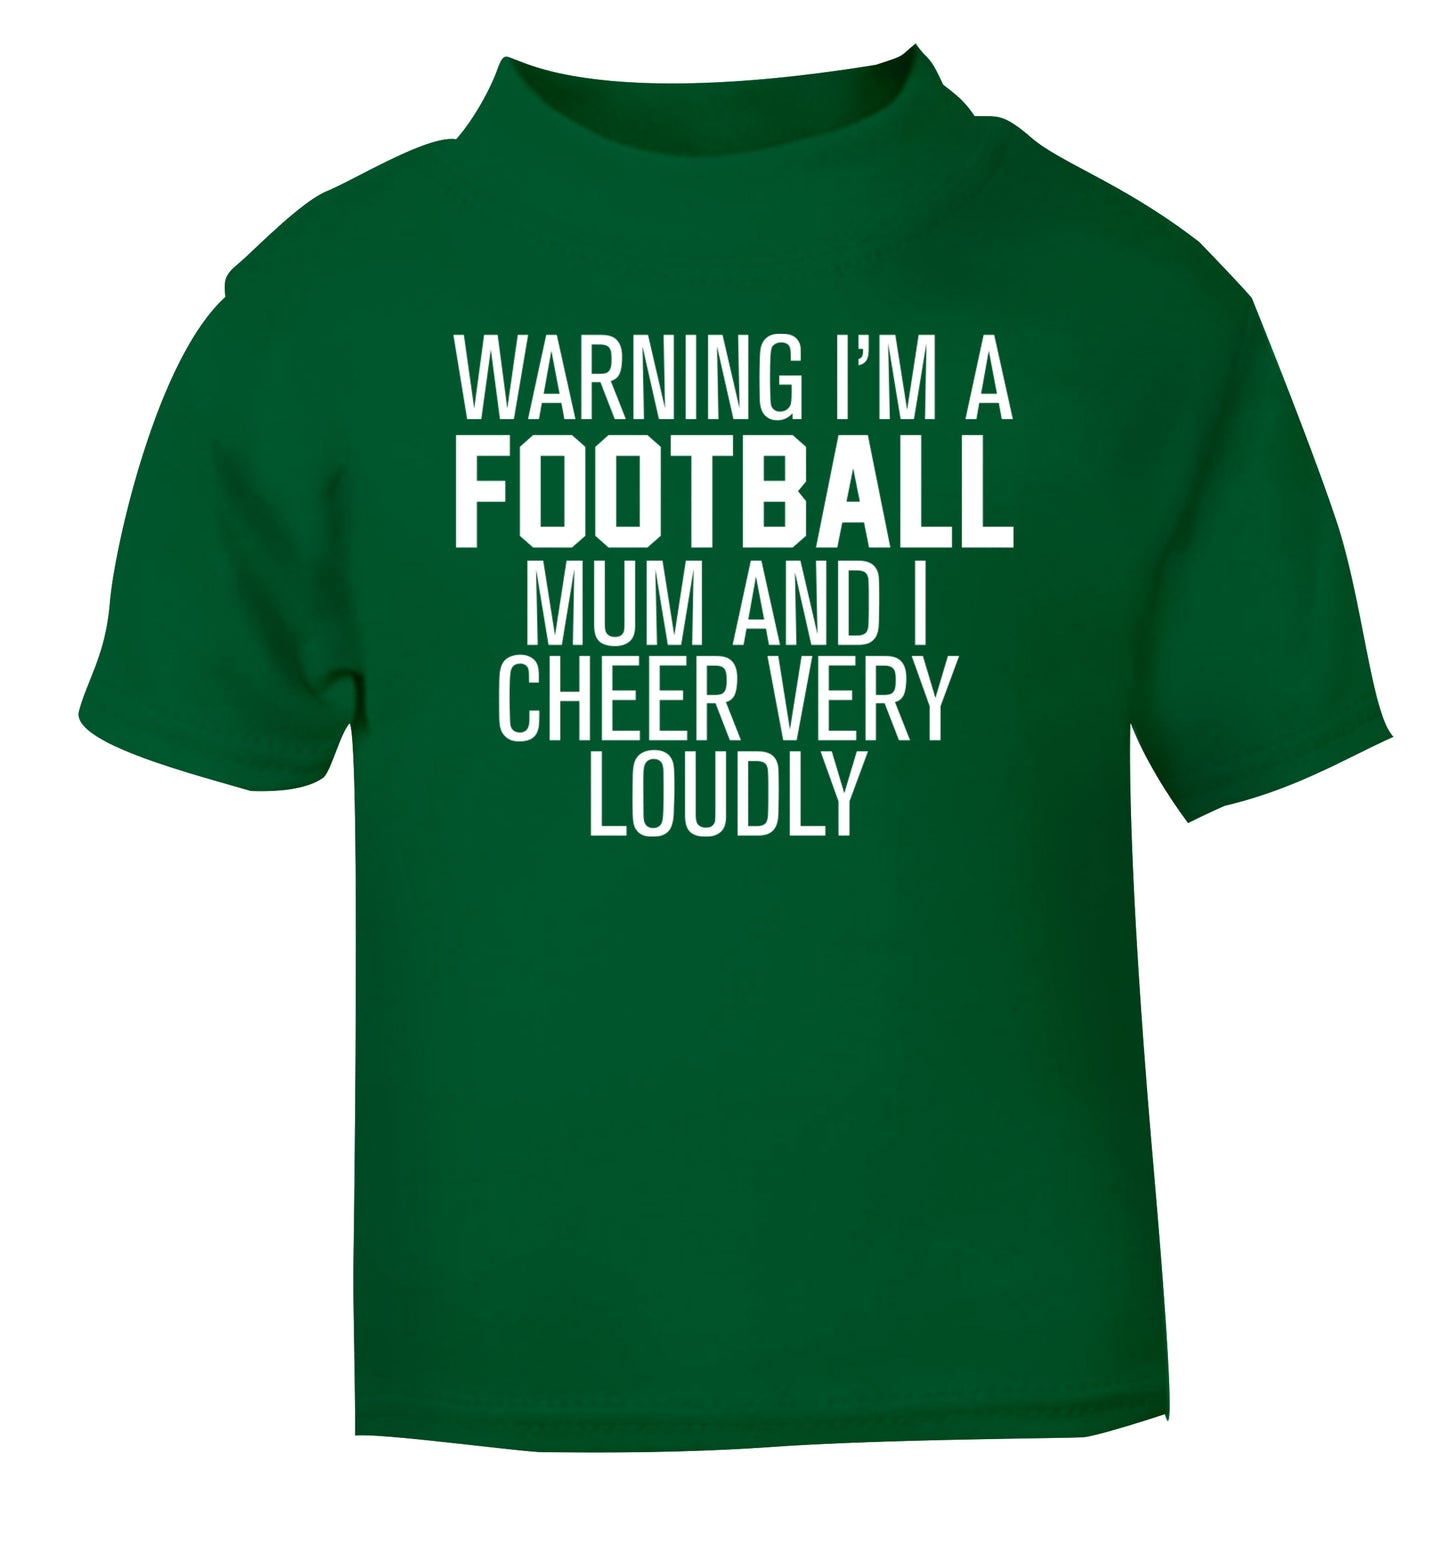 Warning I'm a football mum and I cheer very loudly green Baby Toddler Tshirt 2 Years